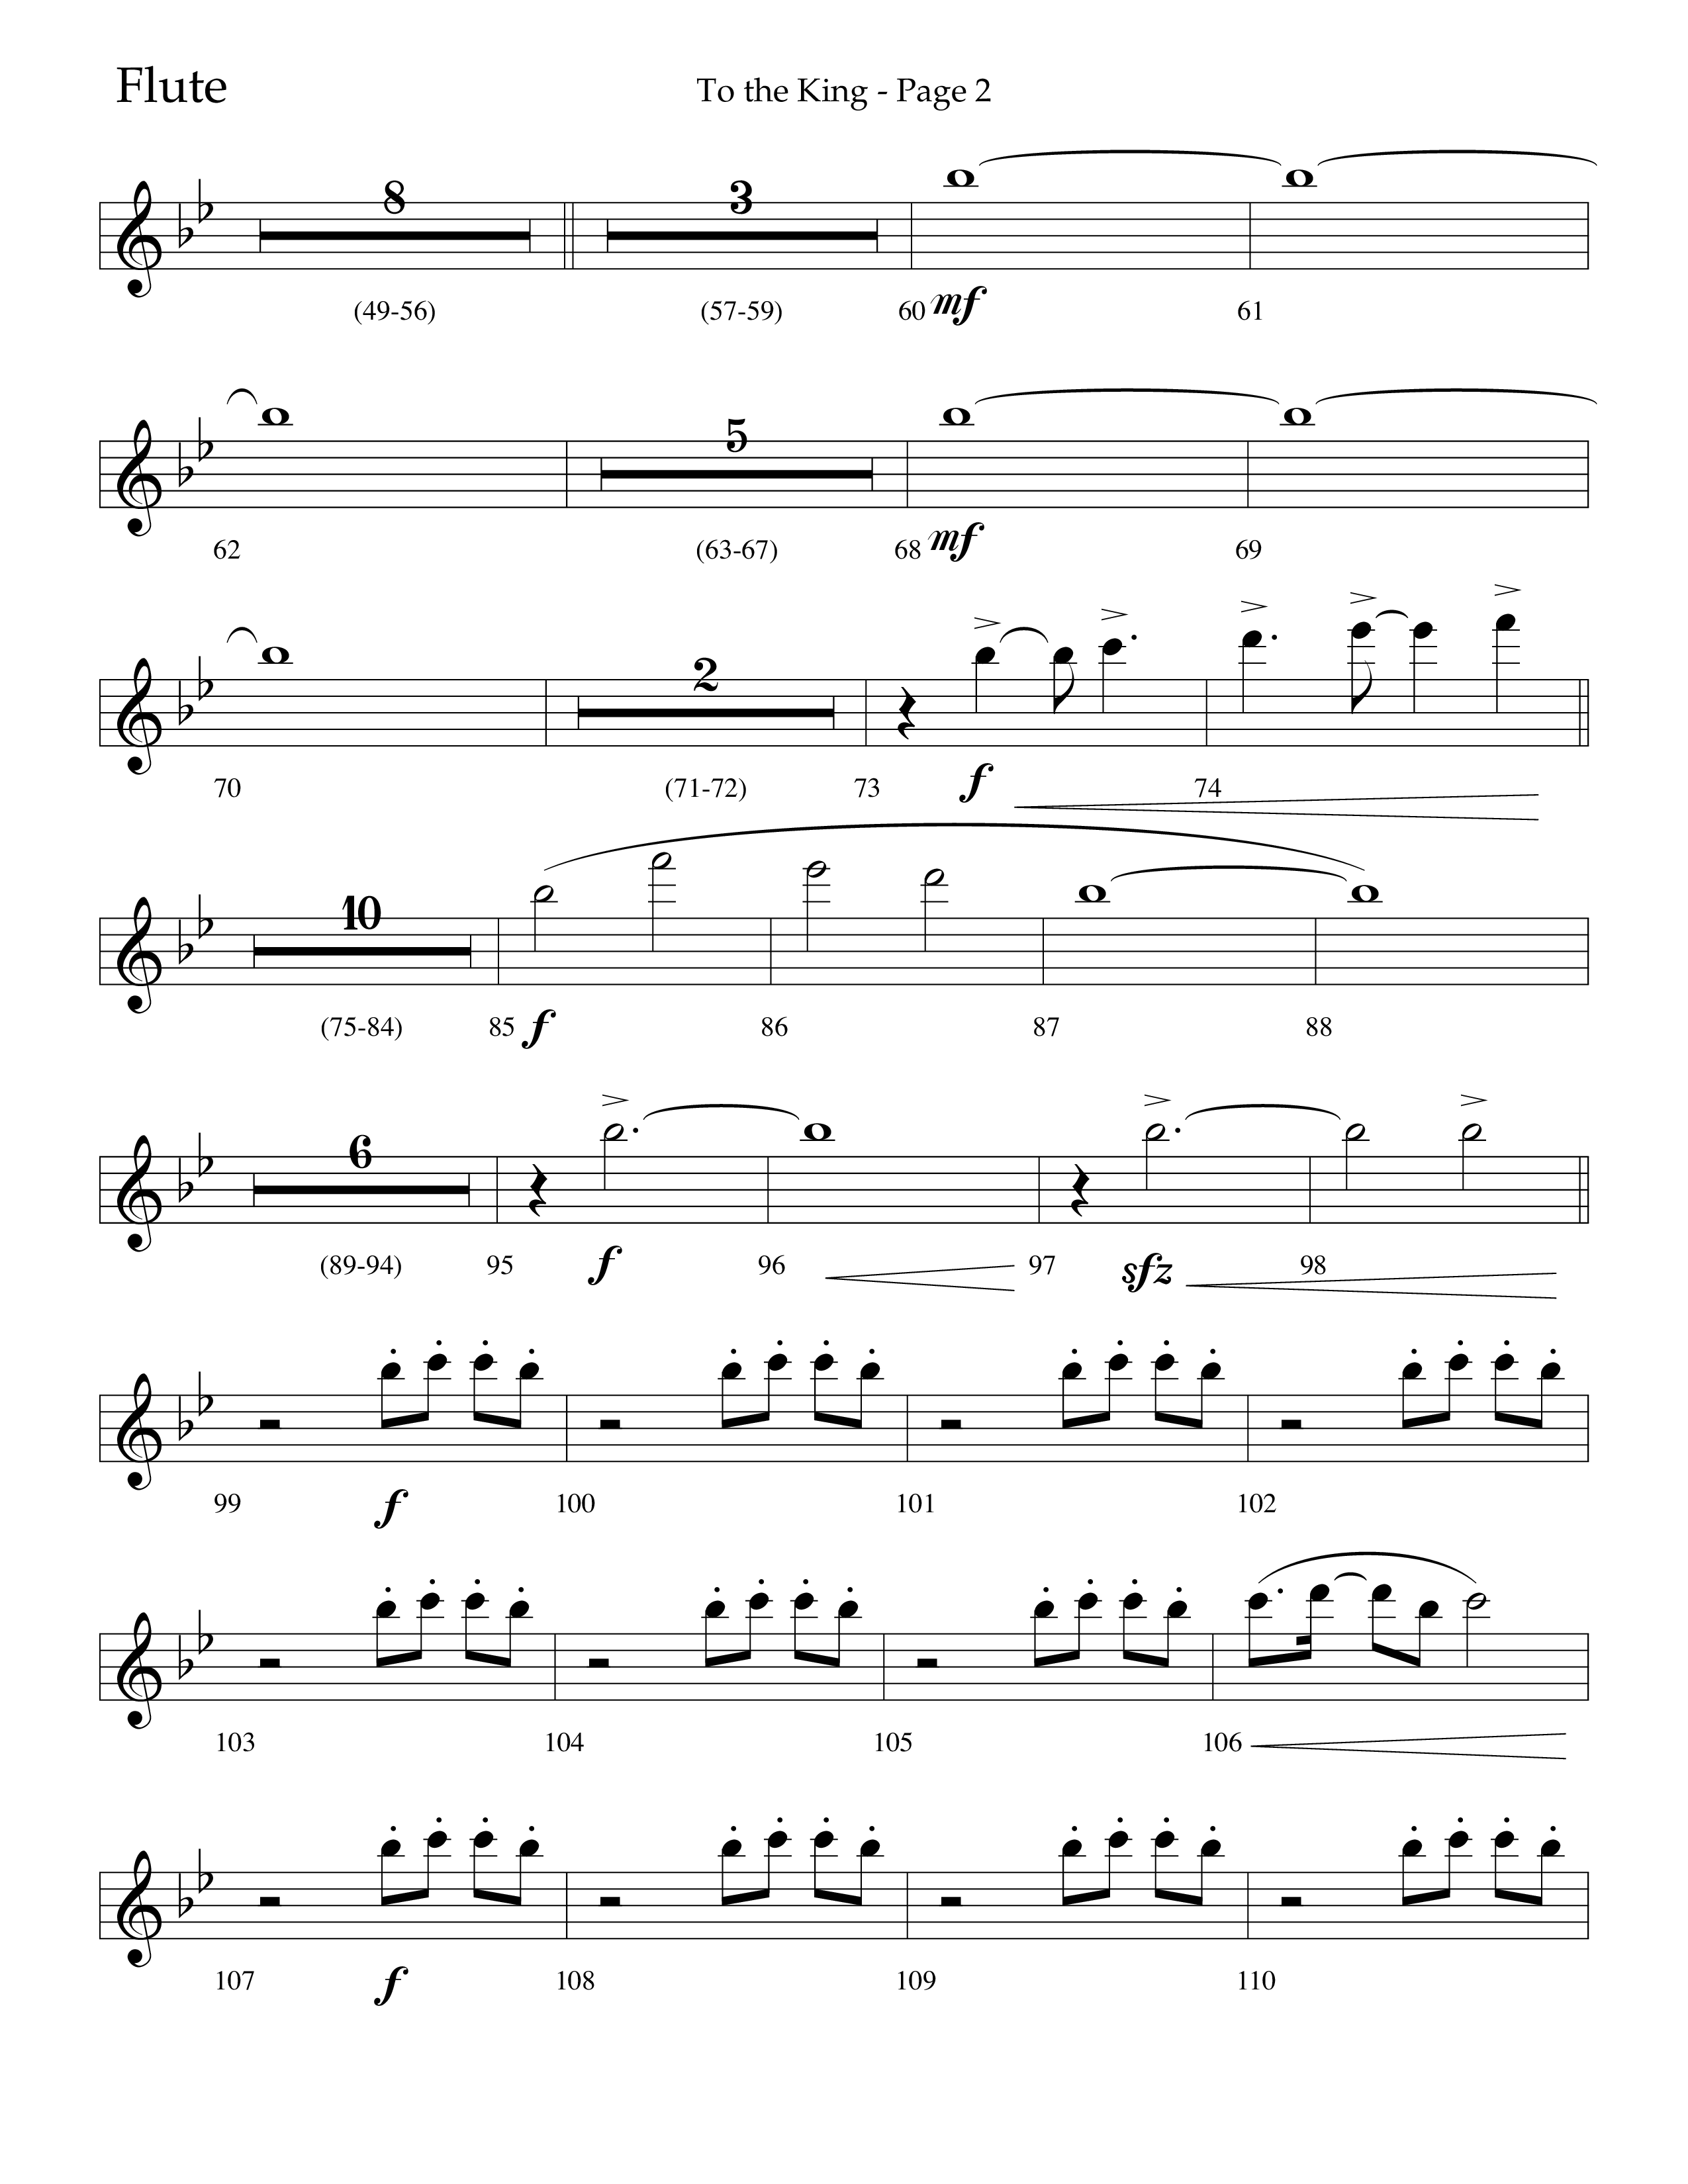 To The King (Choral Anthem SATB) Flute (Lifeway Choral / Arr. Cliff Duren)